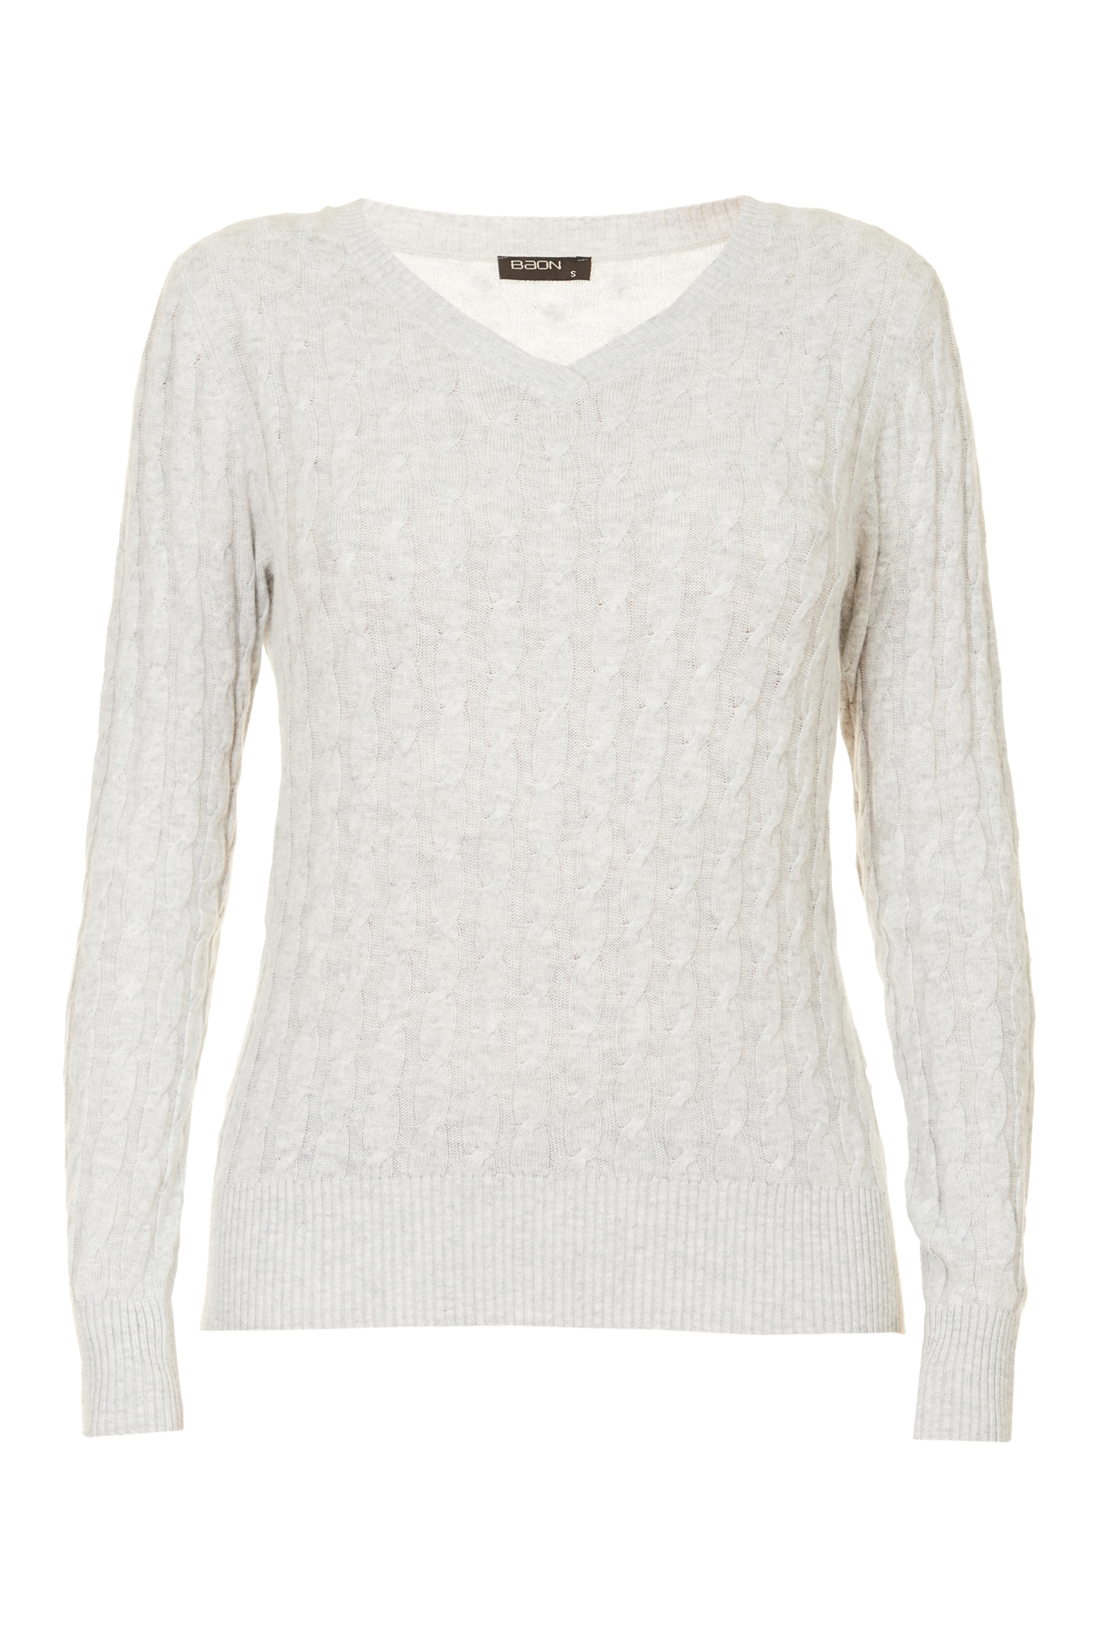 Базовый пуловер с узором и ангорой (арт. baon B137703), размер XS, цвет silver melange#серый Базовый пуловер с узором и ангорой (арт. baon B137703) - фото 3